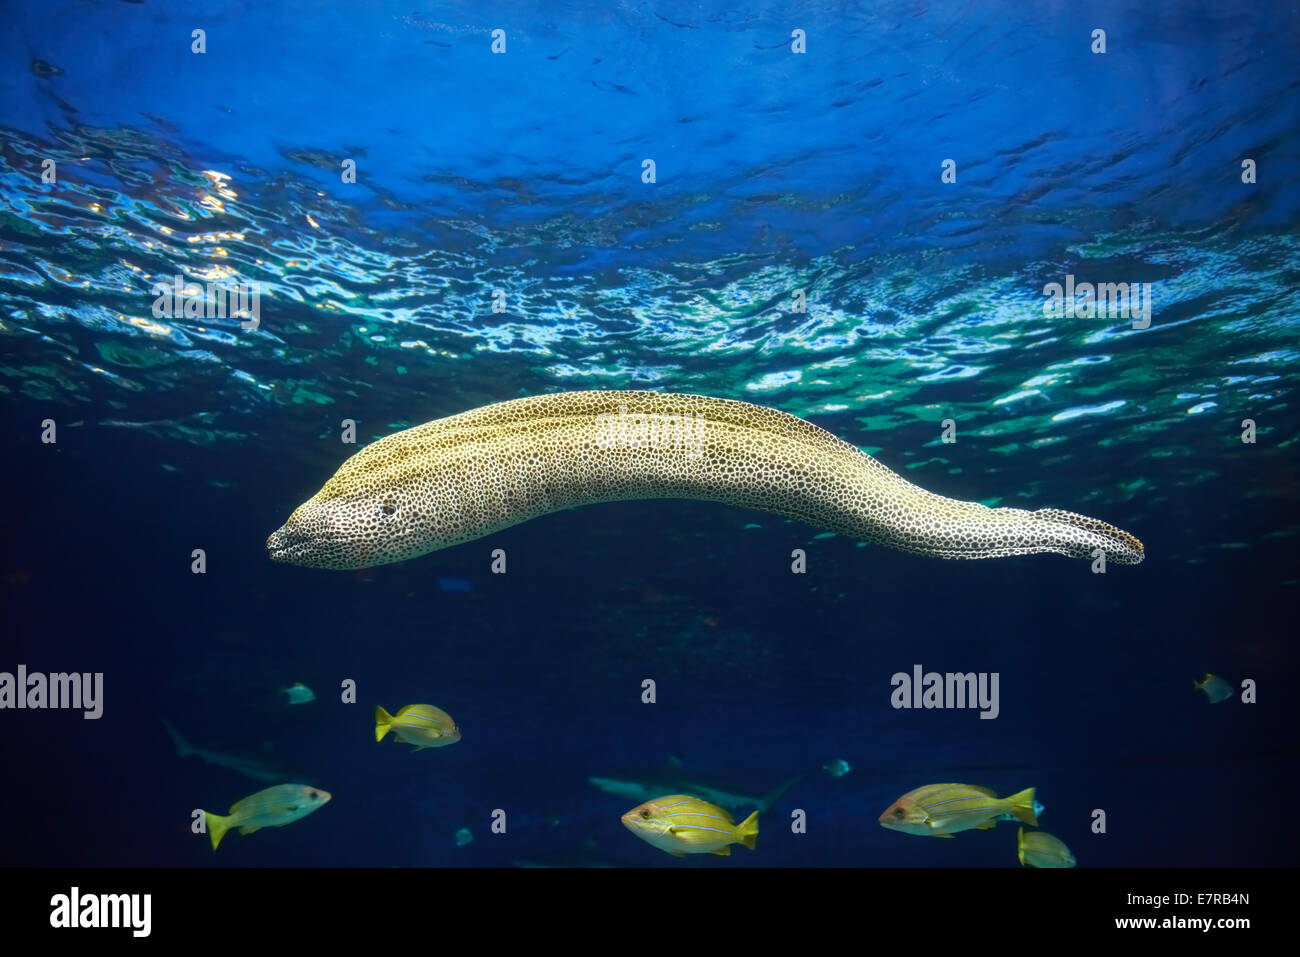 Moray Muraena fish (Gymnothorax favagineus) hunting underwater. Blue water background. Stock Photo